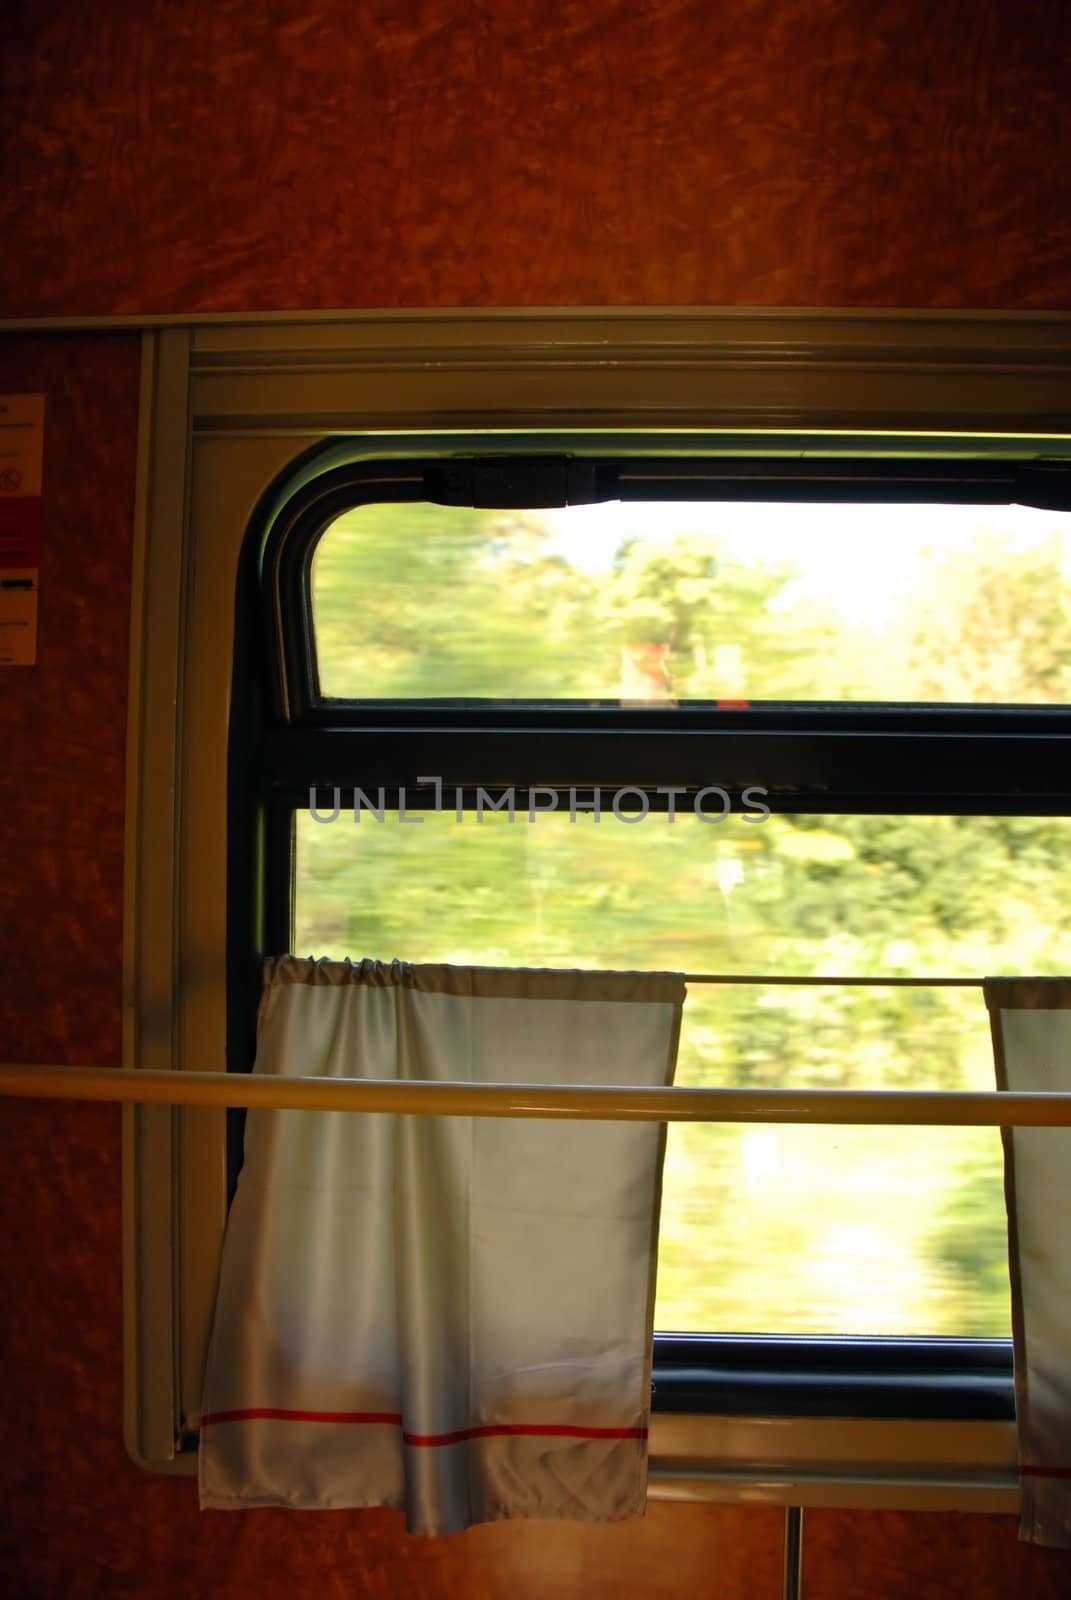 window with curtain inside of train wagon